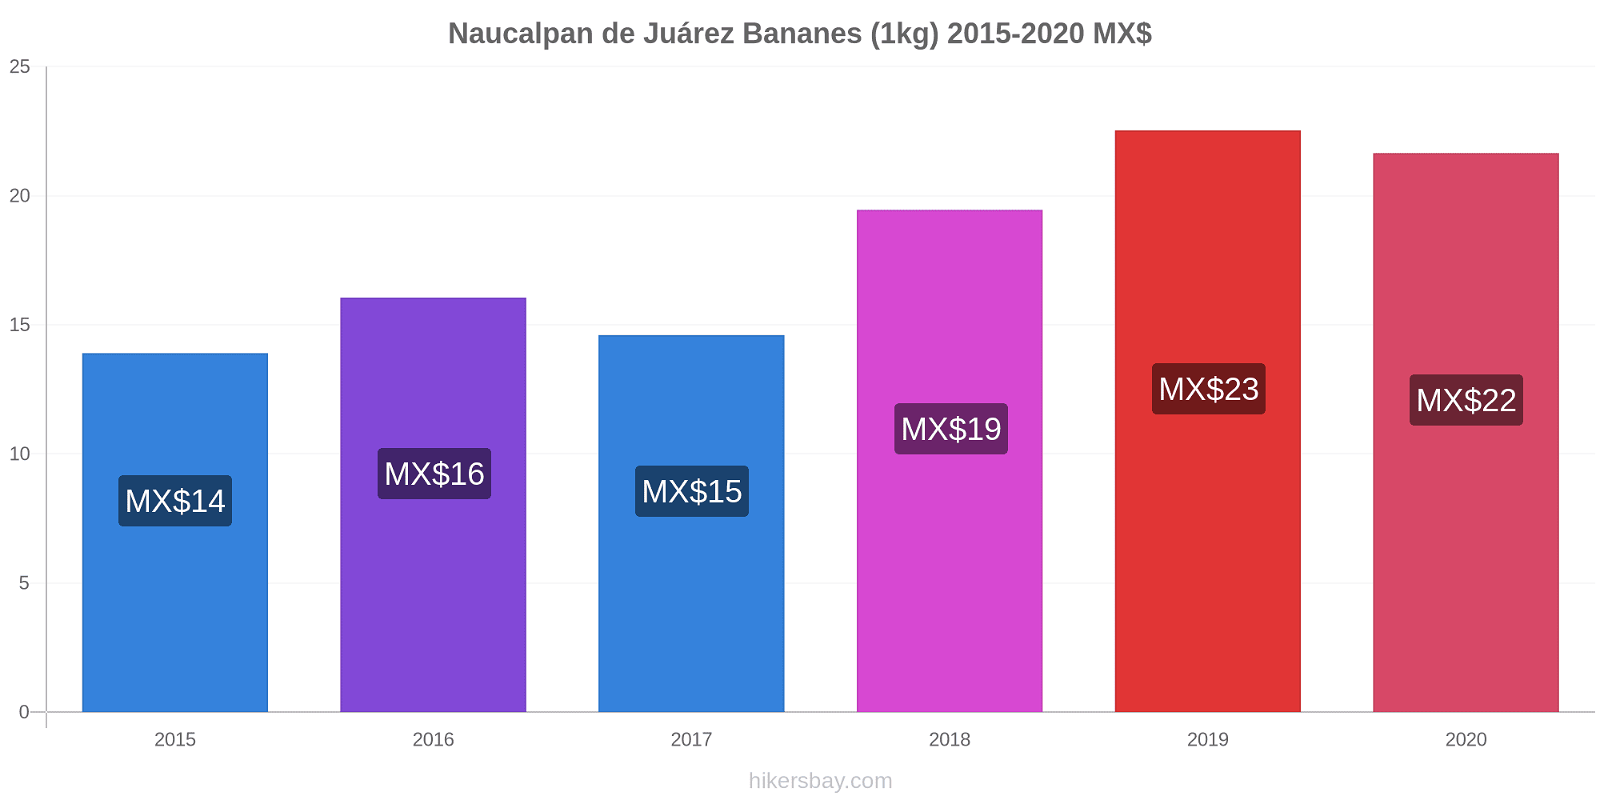 Naucalpan de Juárez changements de prix Bananes (1kg) hikersbay.com